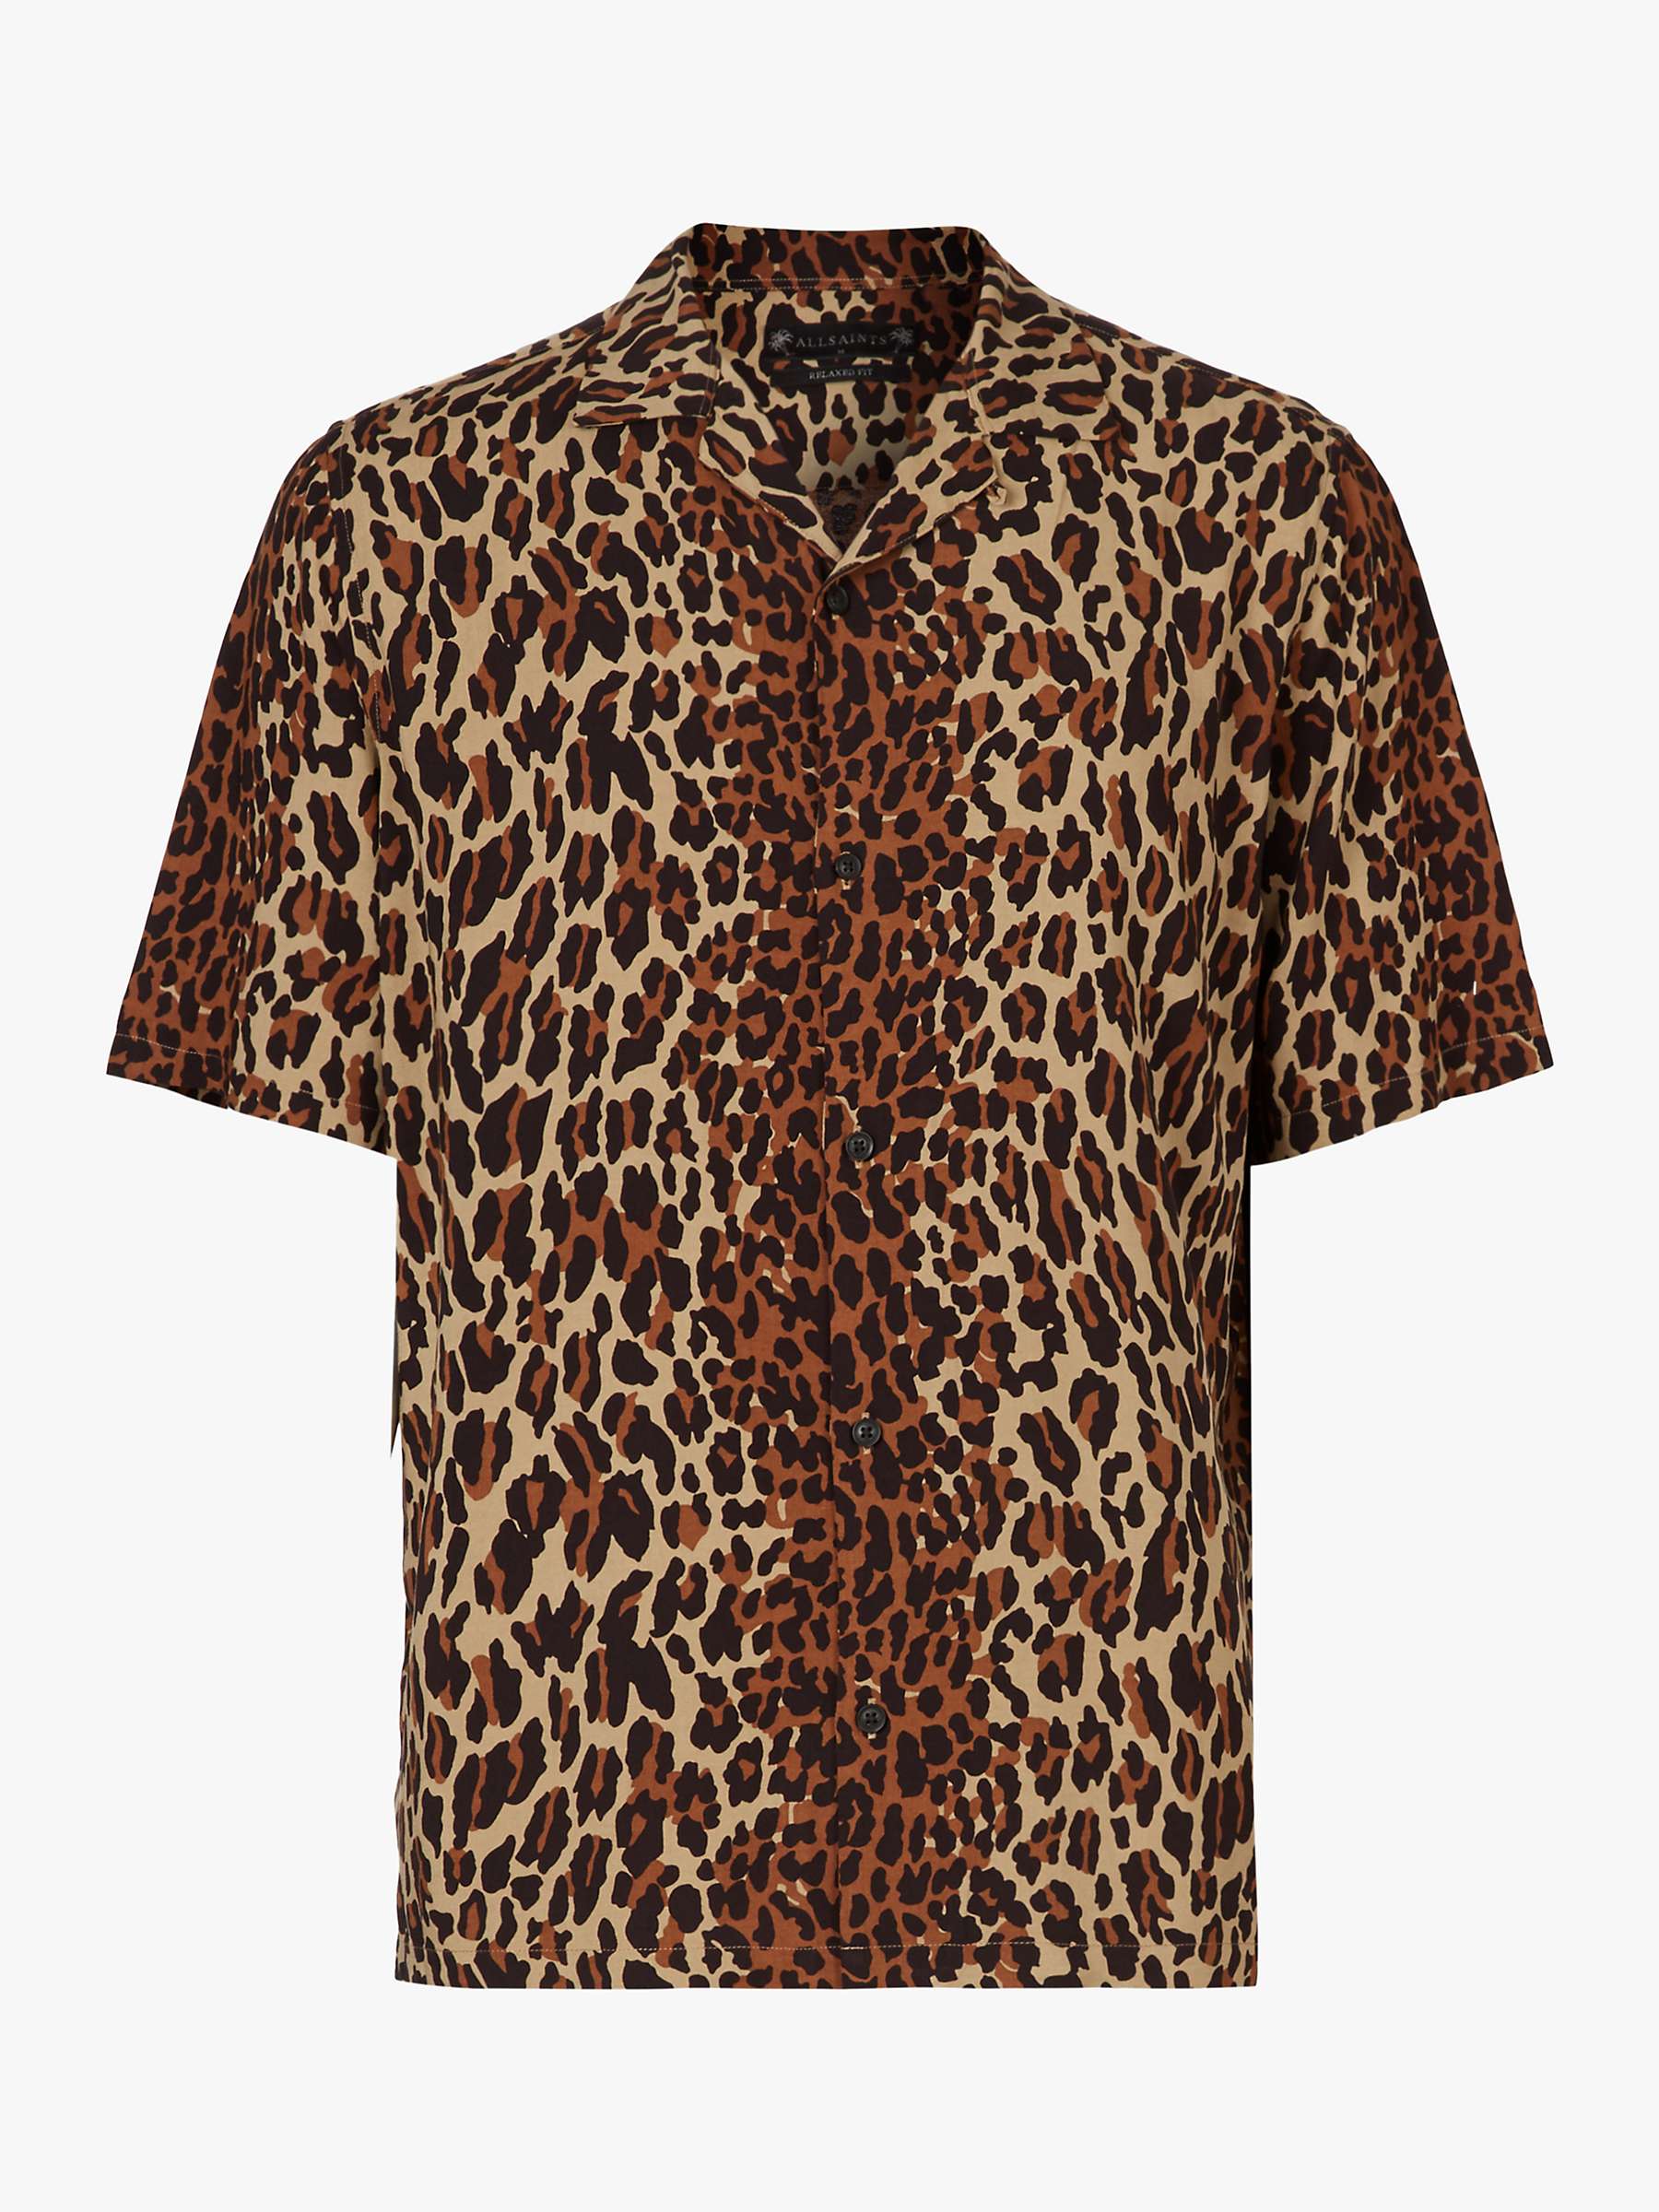 AllSaints Vega Leopard Short Sleeve Shirt, Beige at John Lewis & Partners